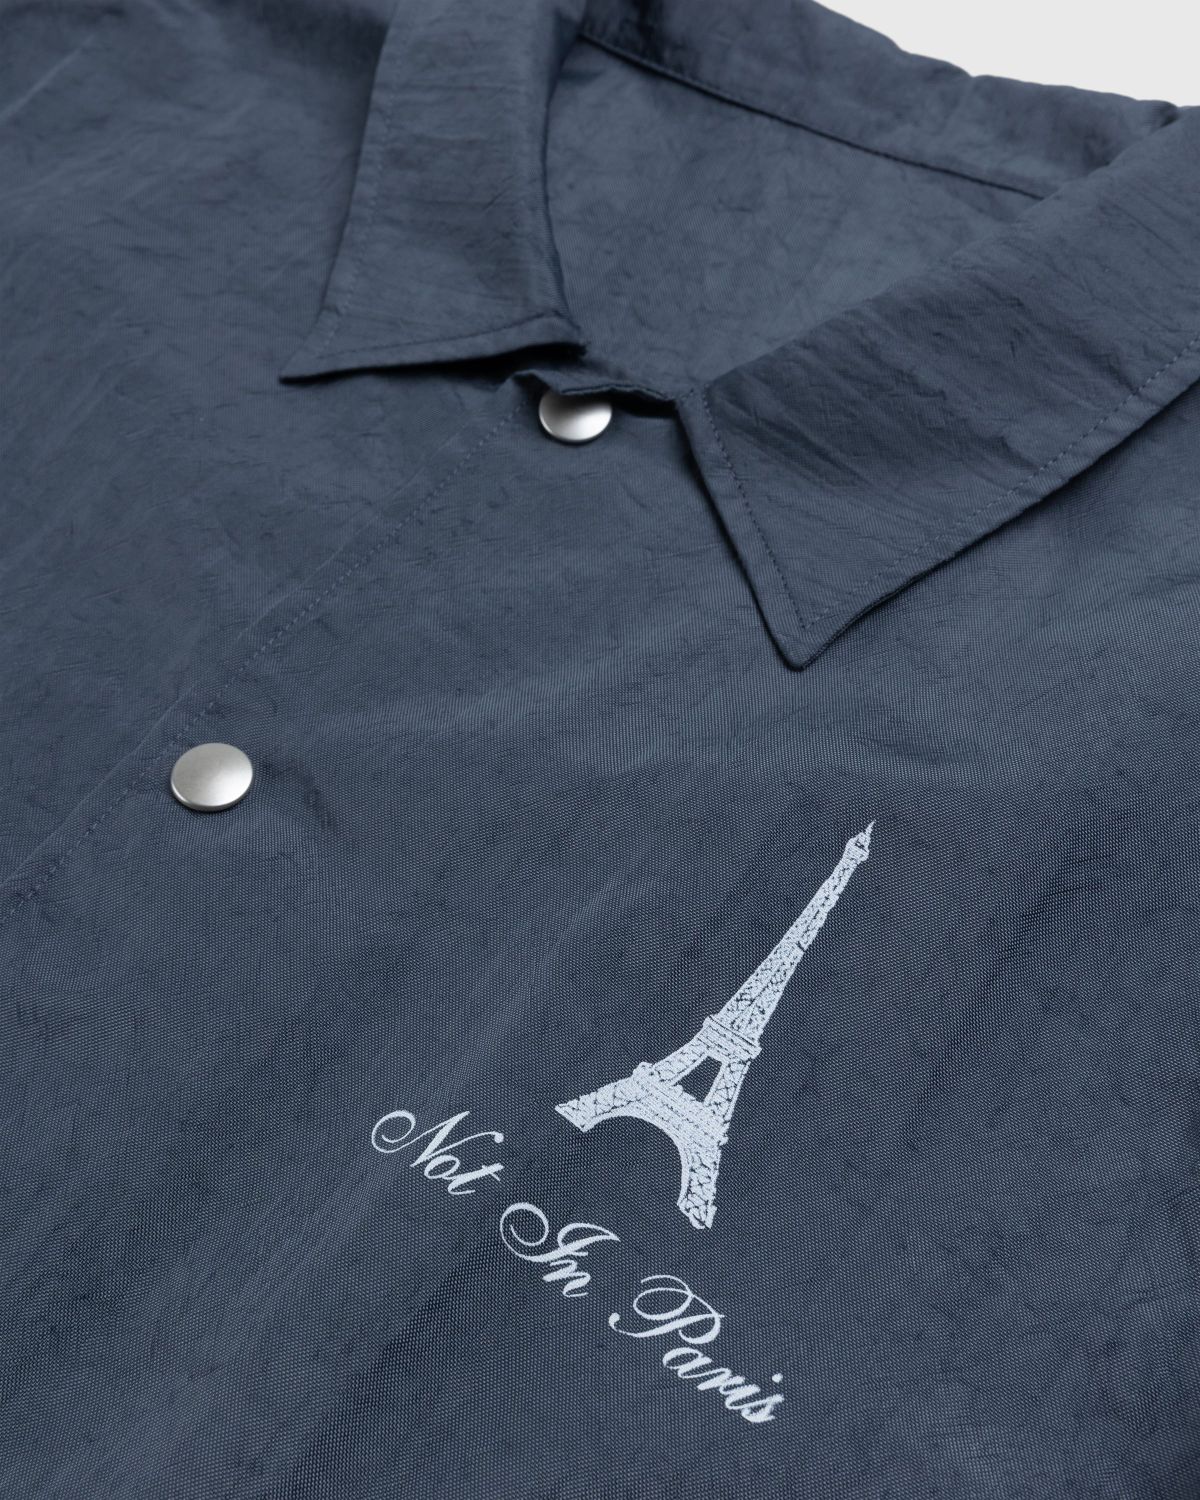 Highsnobiety – Not in Paris 5 Coach Jacket - Outerwear - Grey - Image 6